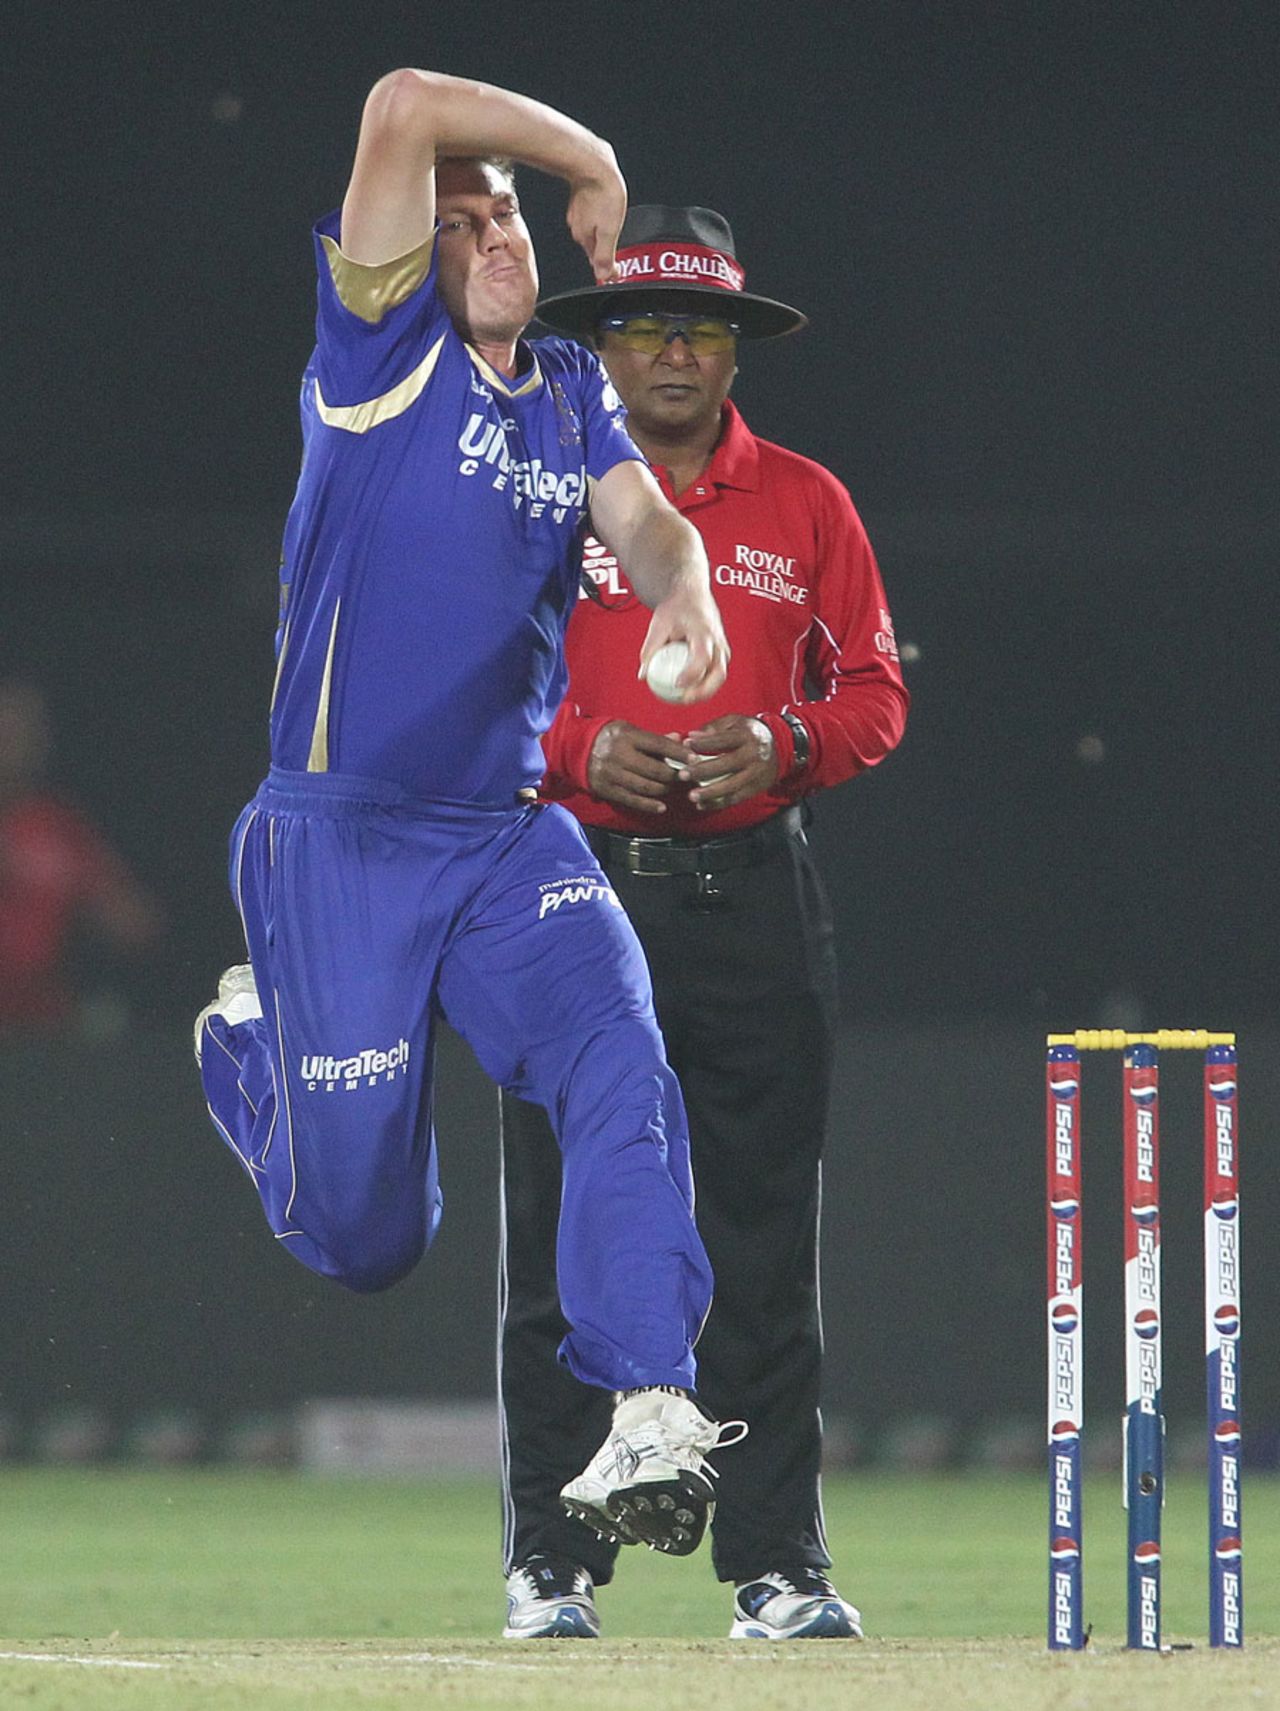 James Faulkner picked up three wickets for 16 runs, Rajasthan Royals v Mumbai Indians, IPL 2013, Jaipur, April 17, 2013